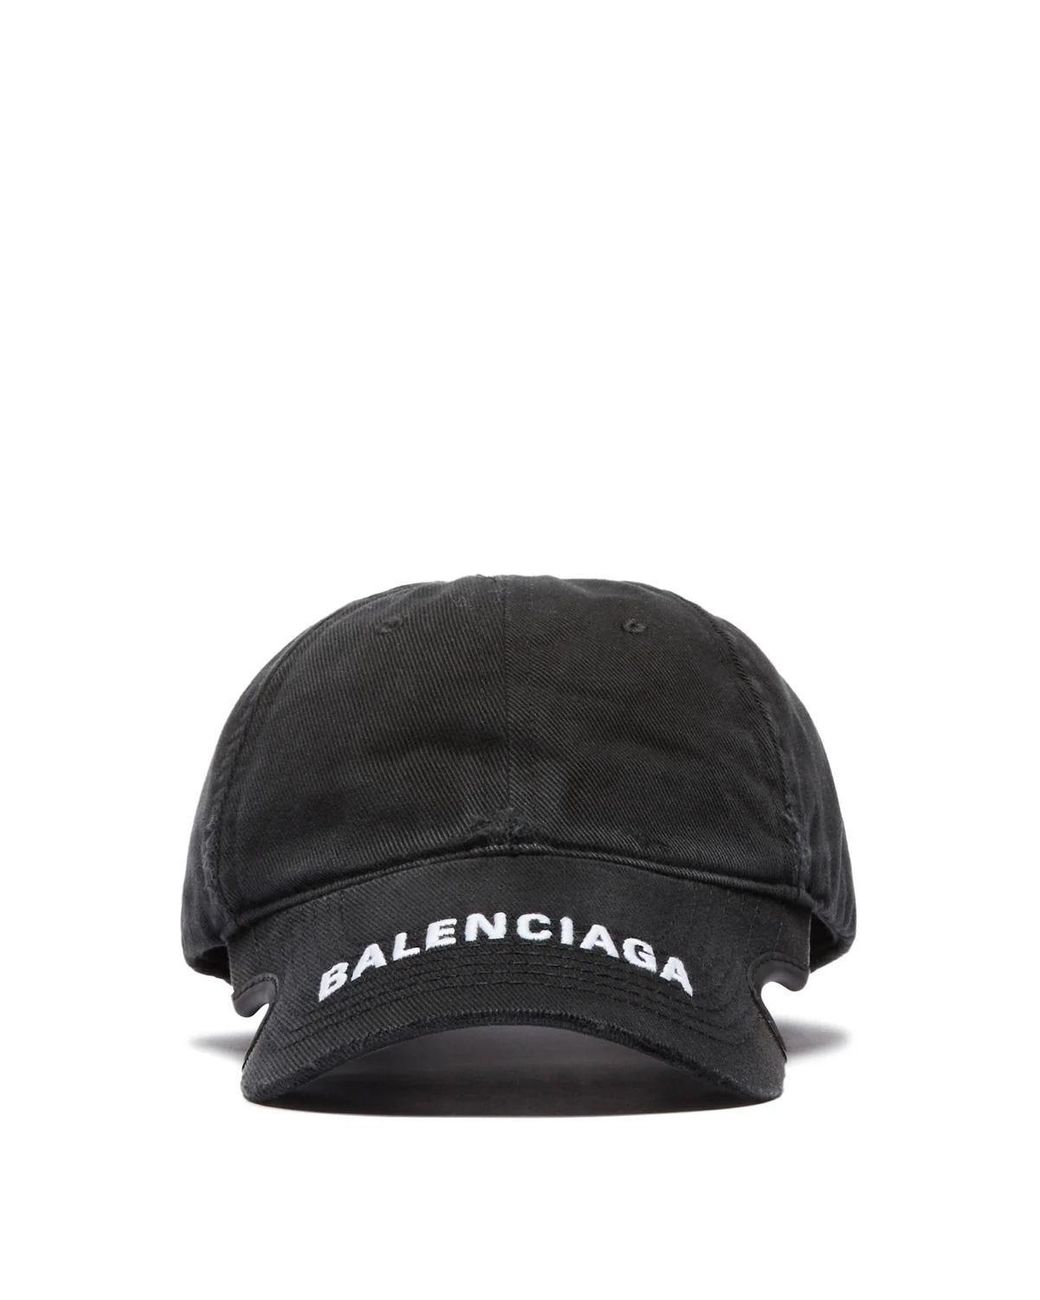 Balenciaga Canvas Black Baseball Hat for Men | Lyst